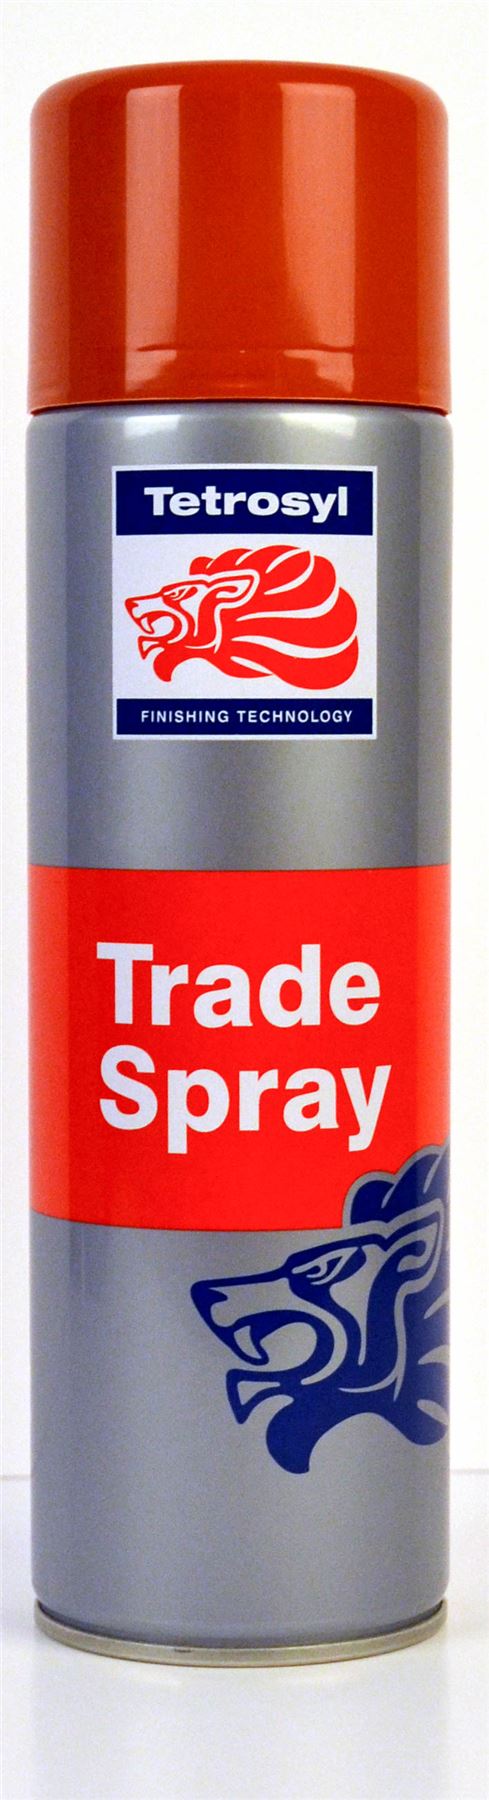 Tetrosyl Trade Spray Paint Red Oxide Primer 500ml